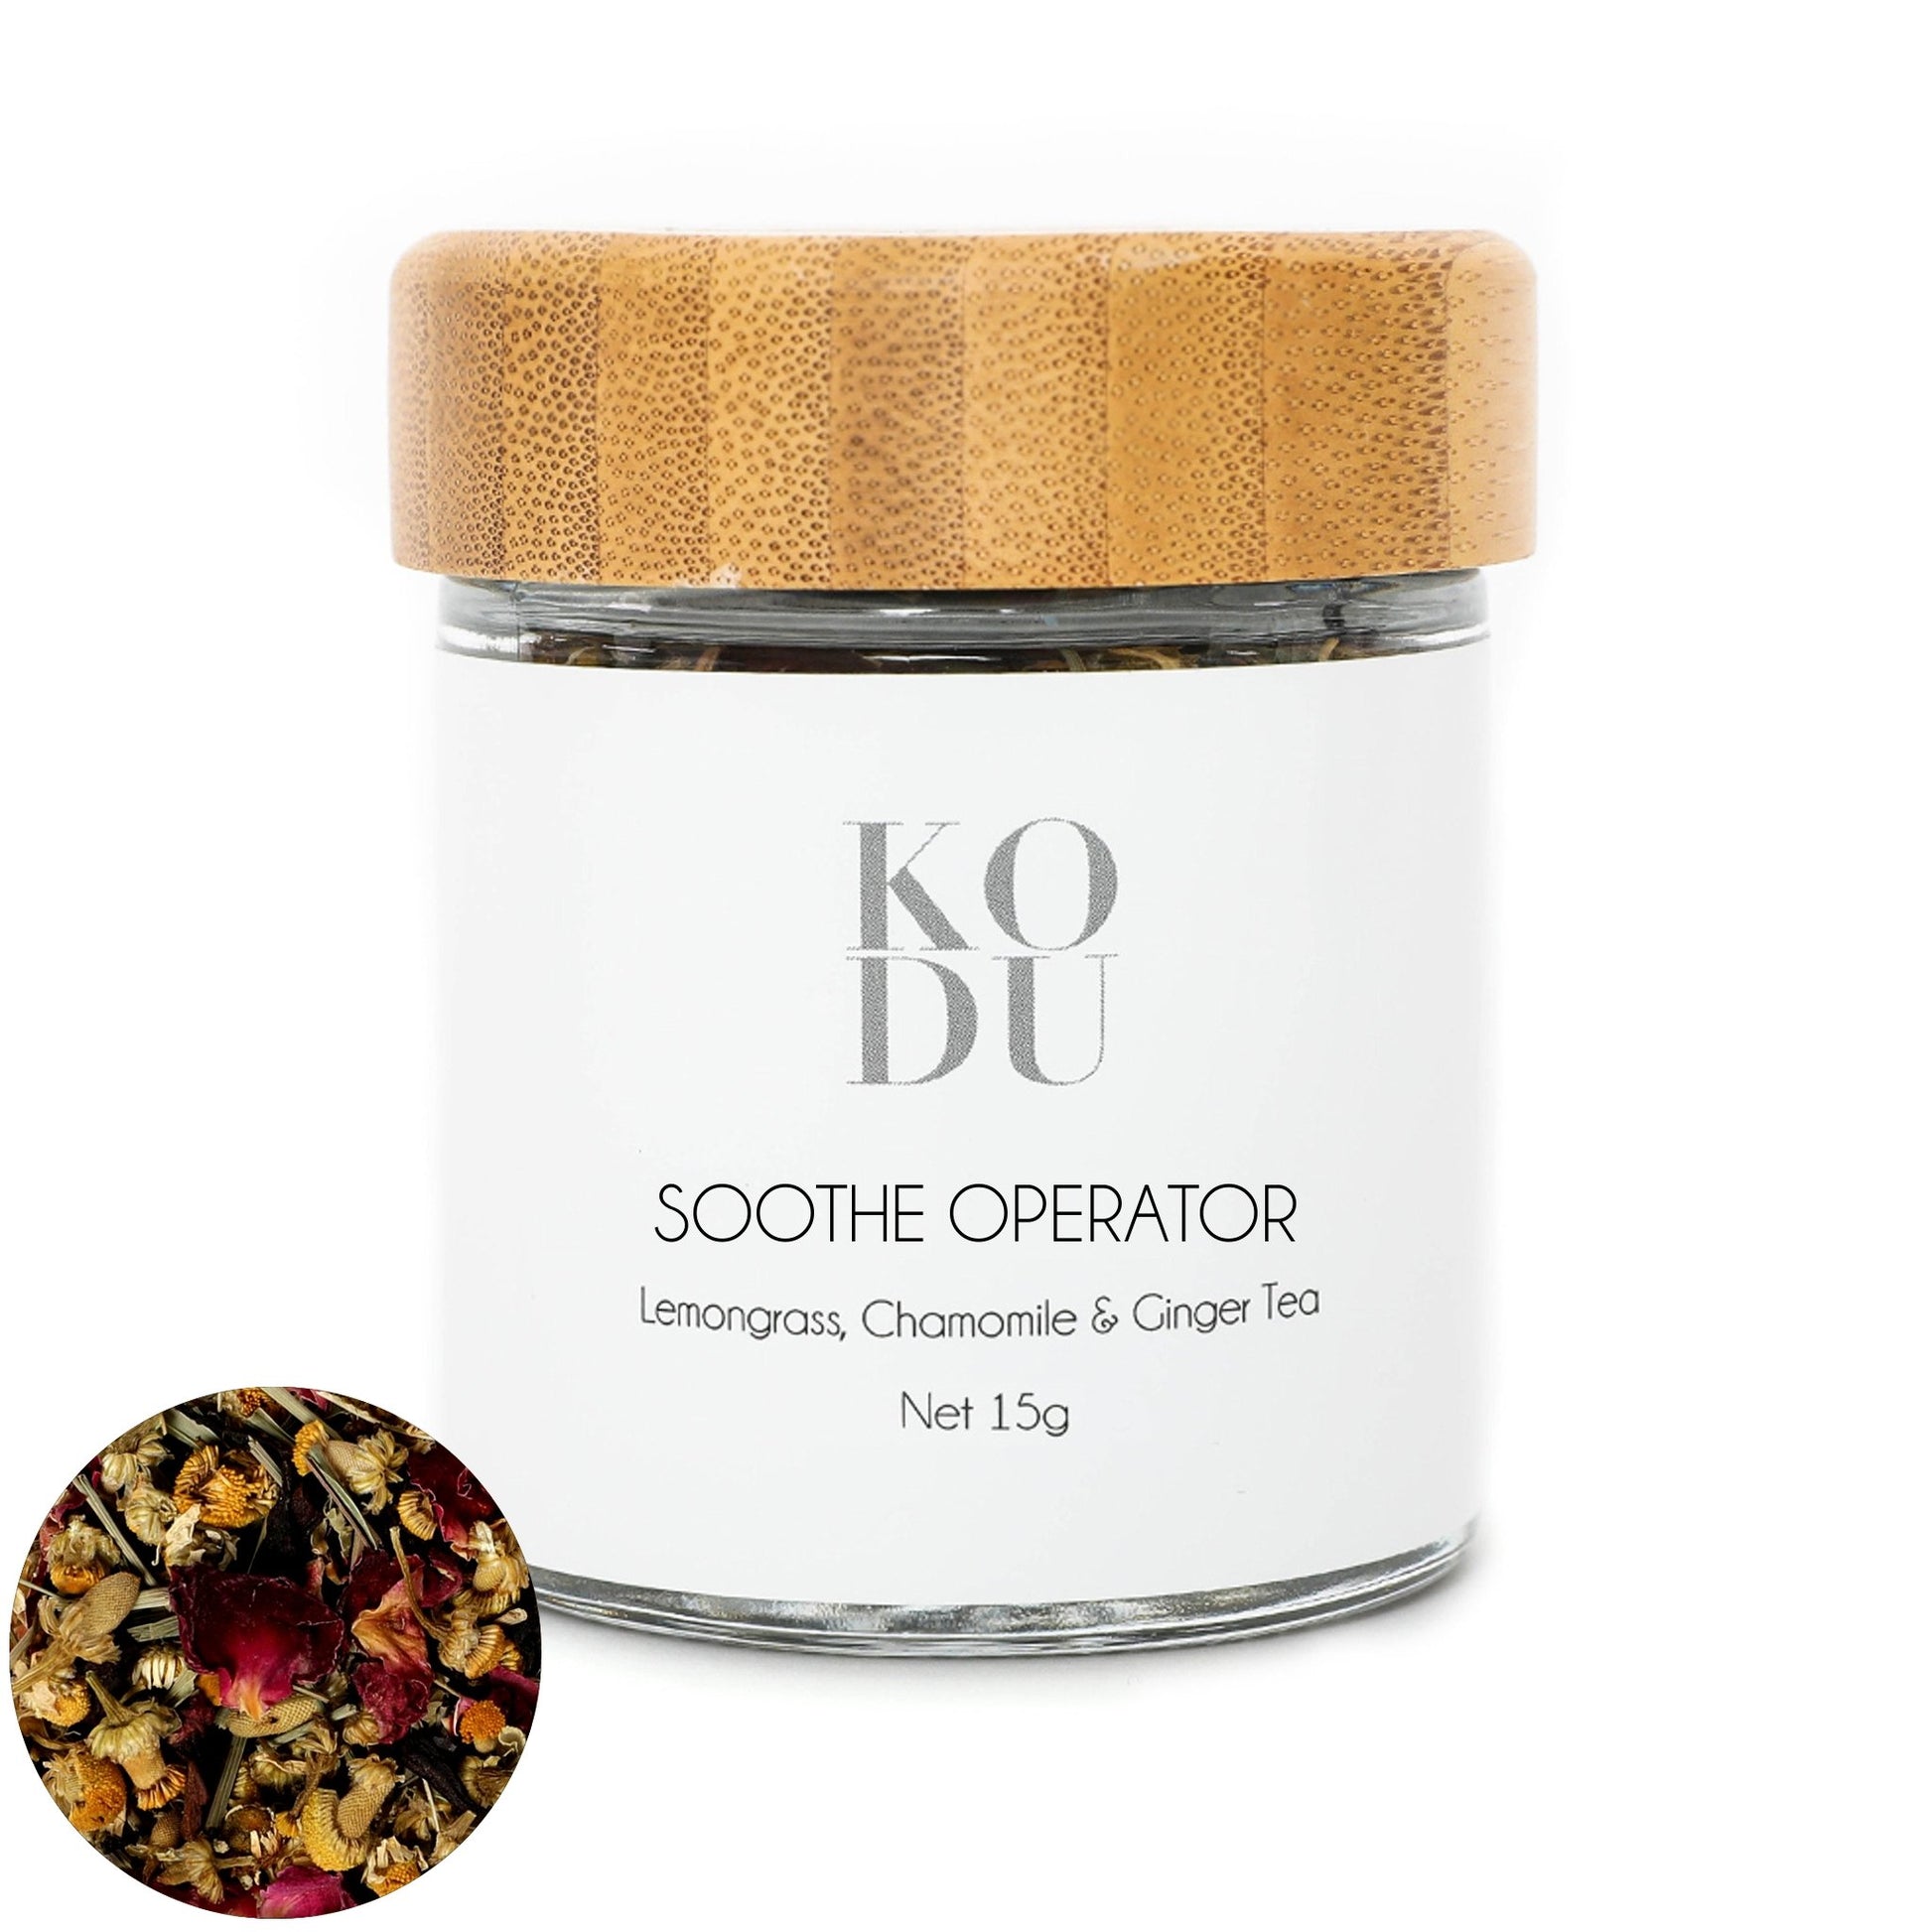 Soothe Operator - Loose Leaf Tea Infusion - Lemongrass, Chamomile, Ginger & Rose - mykodu